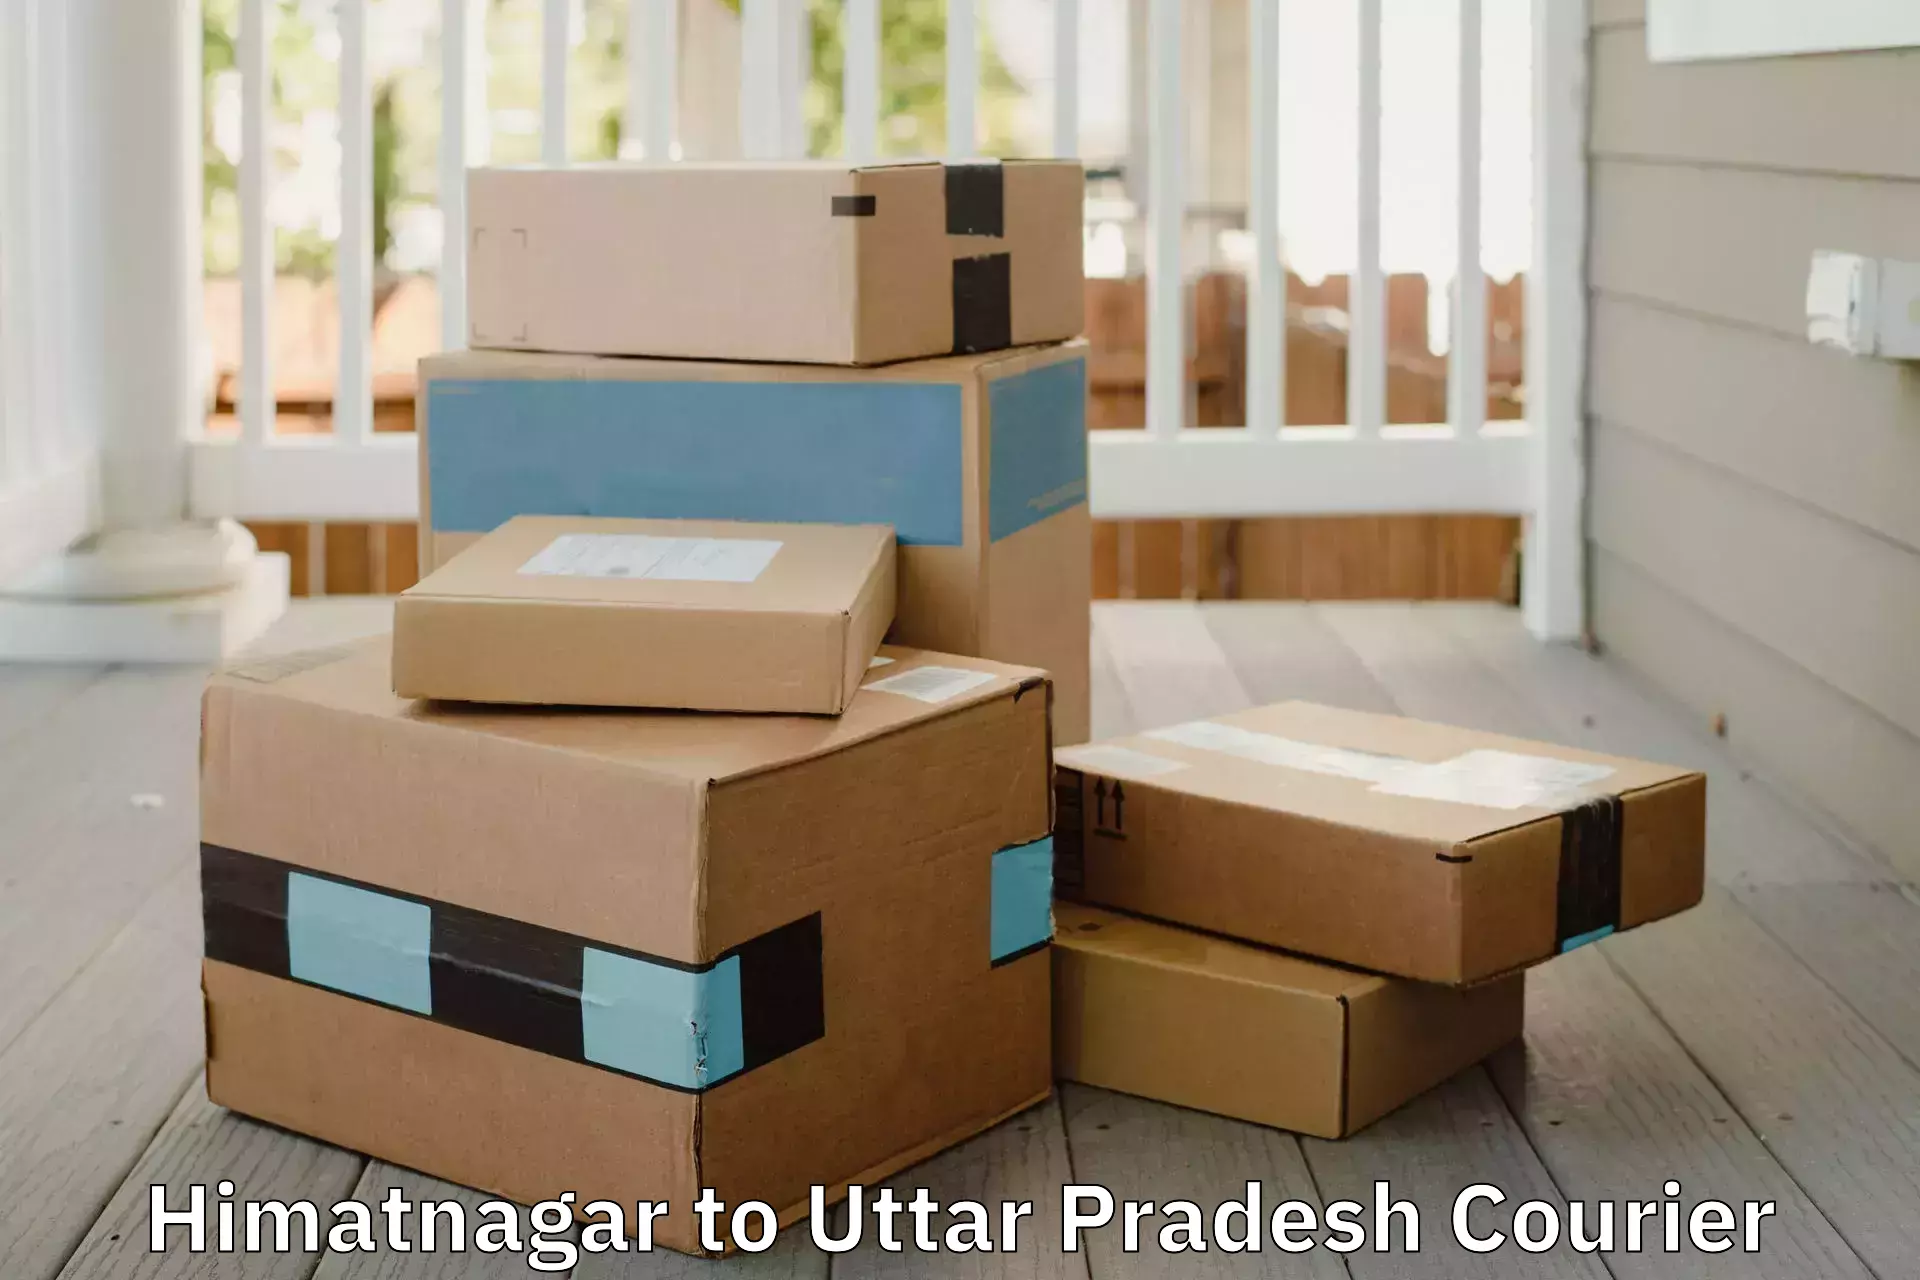 Trusted moving company Himatnagar to Agra